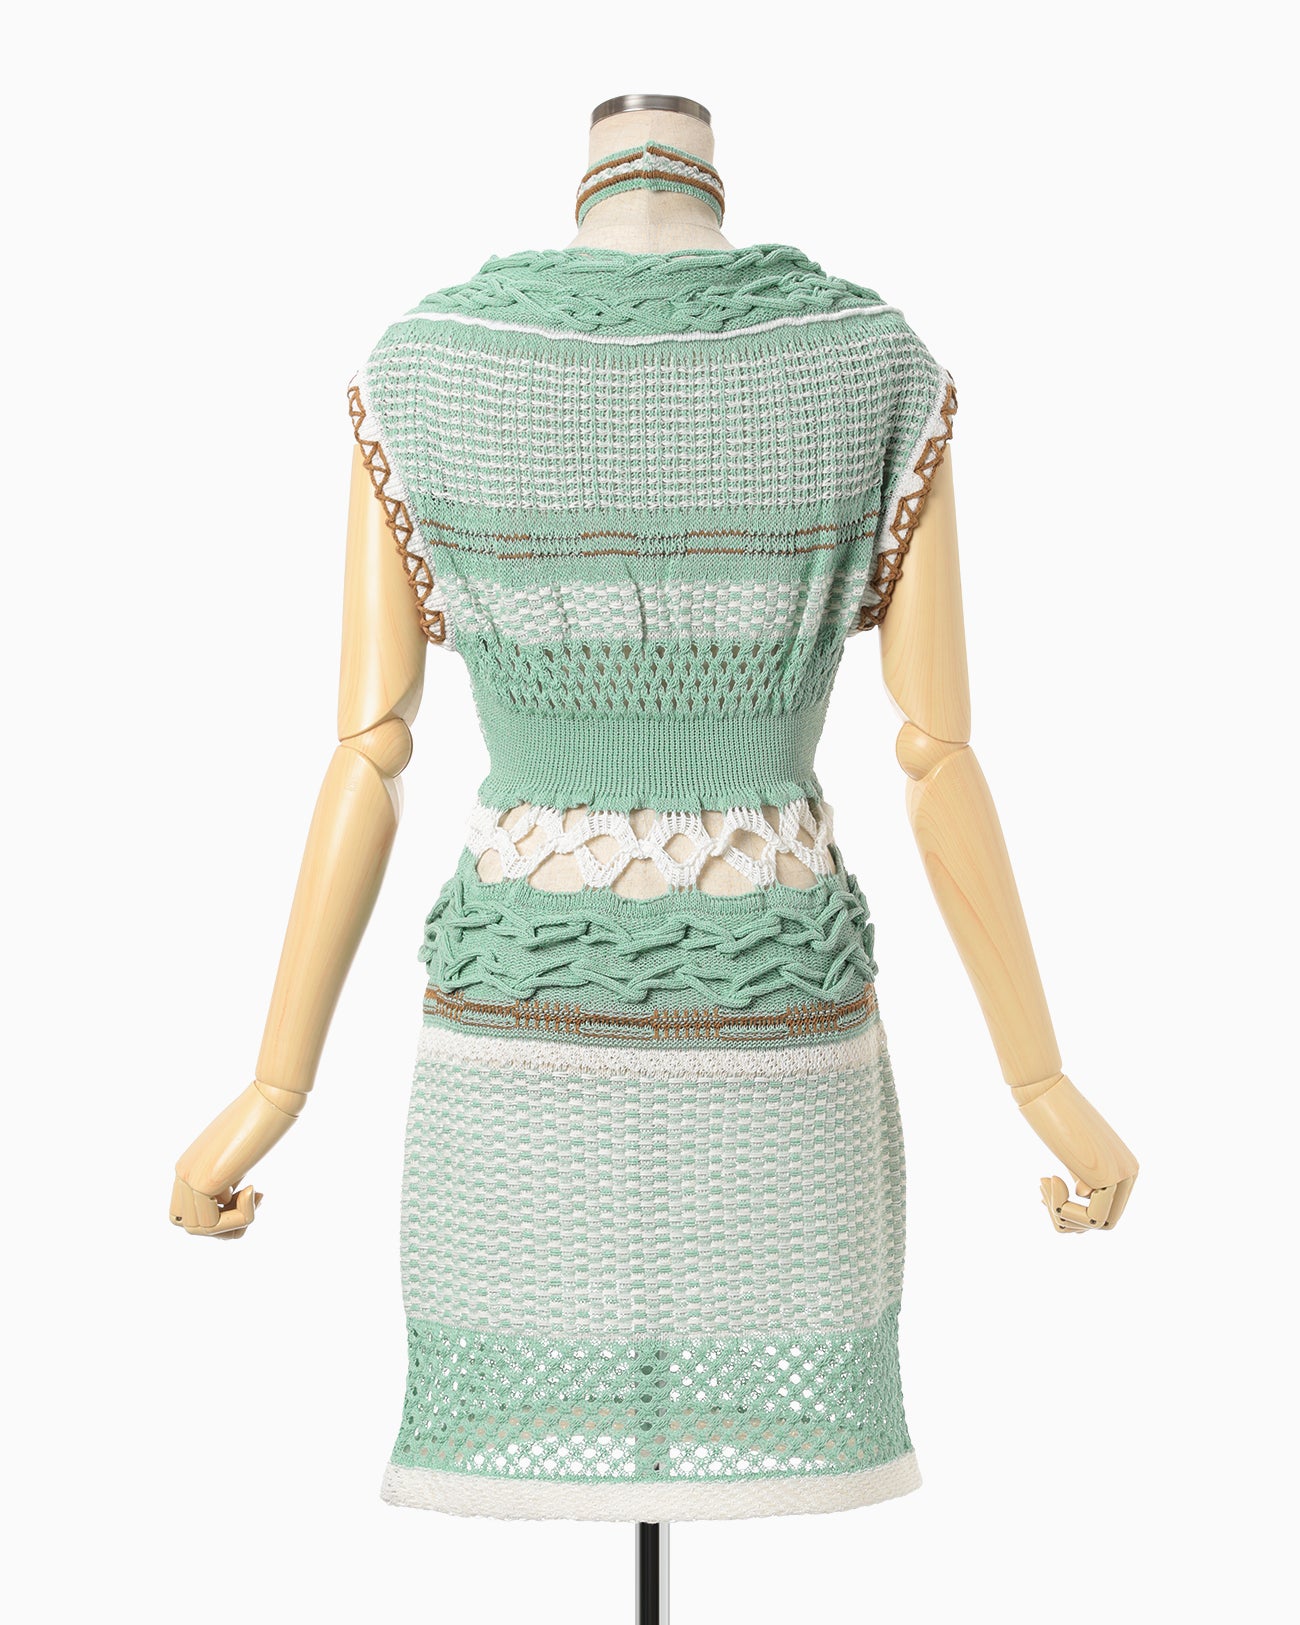 Bamboo Basket Pattern Knitted Dress - mint green